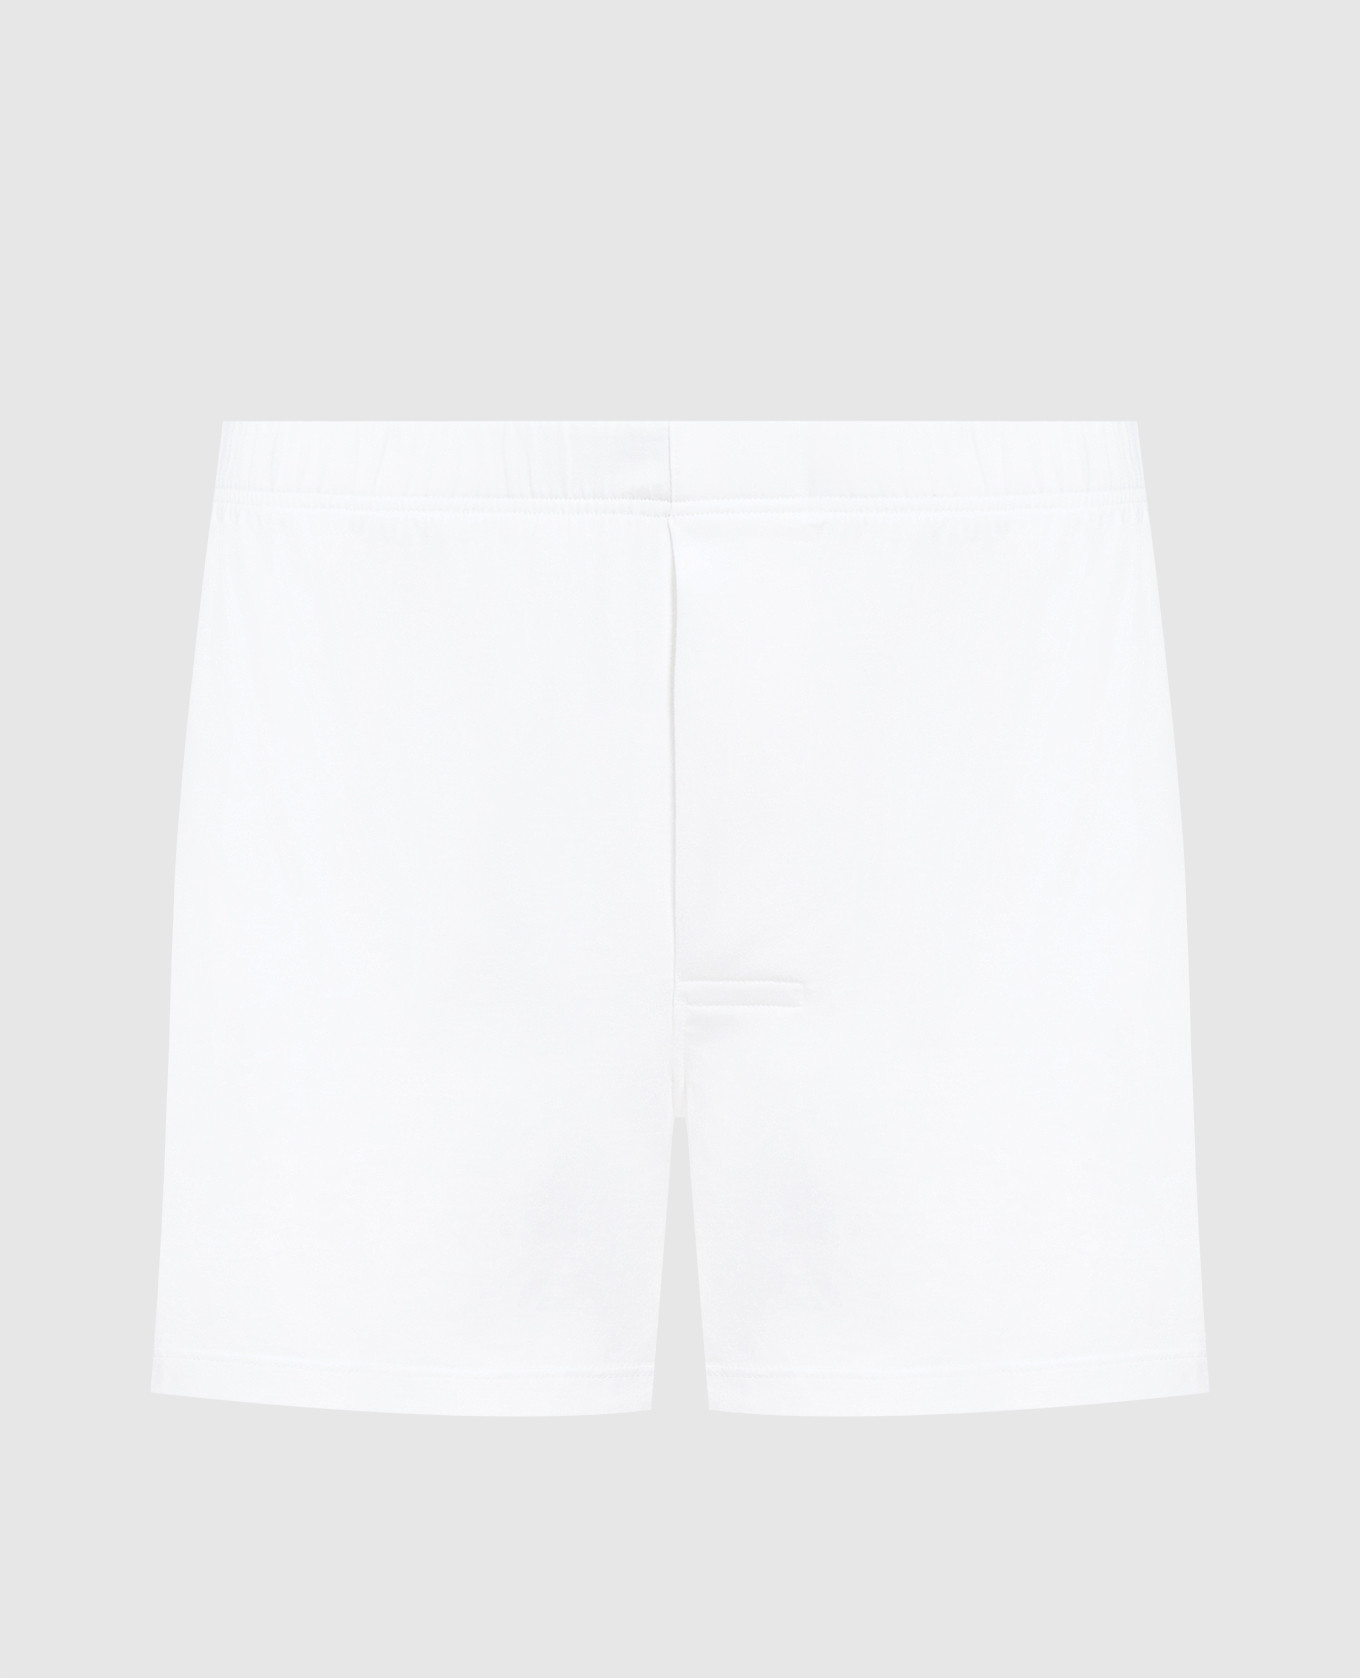 White boxer shorts